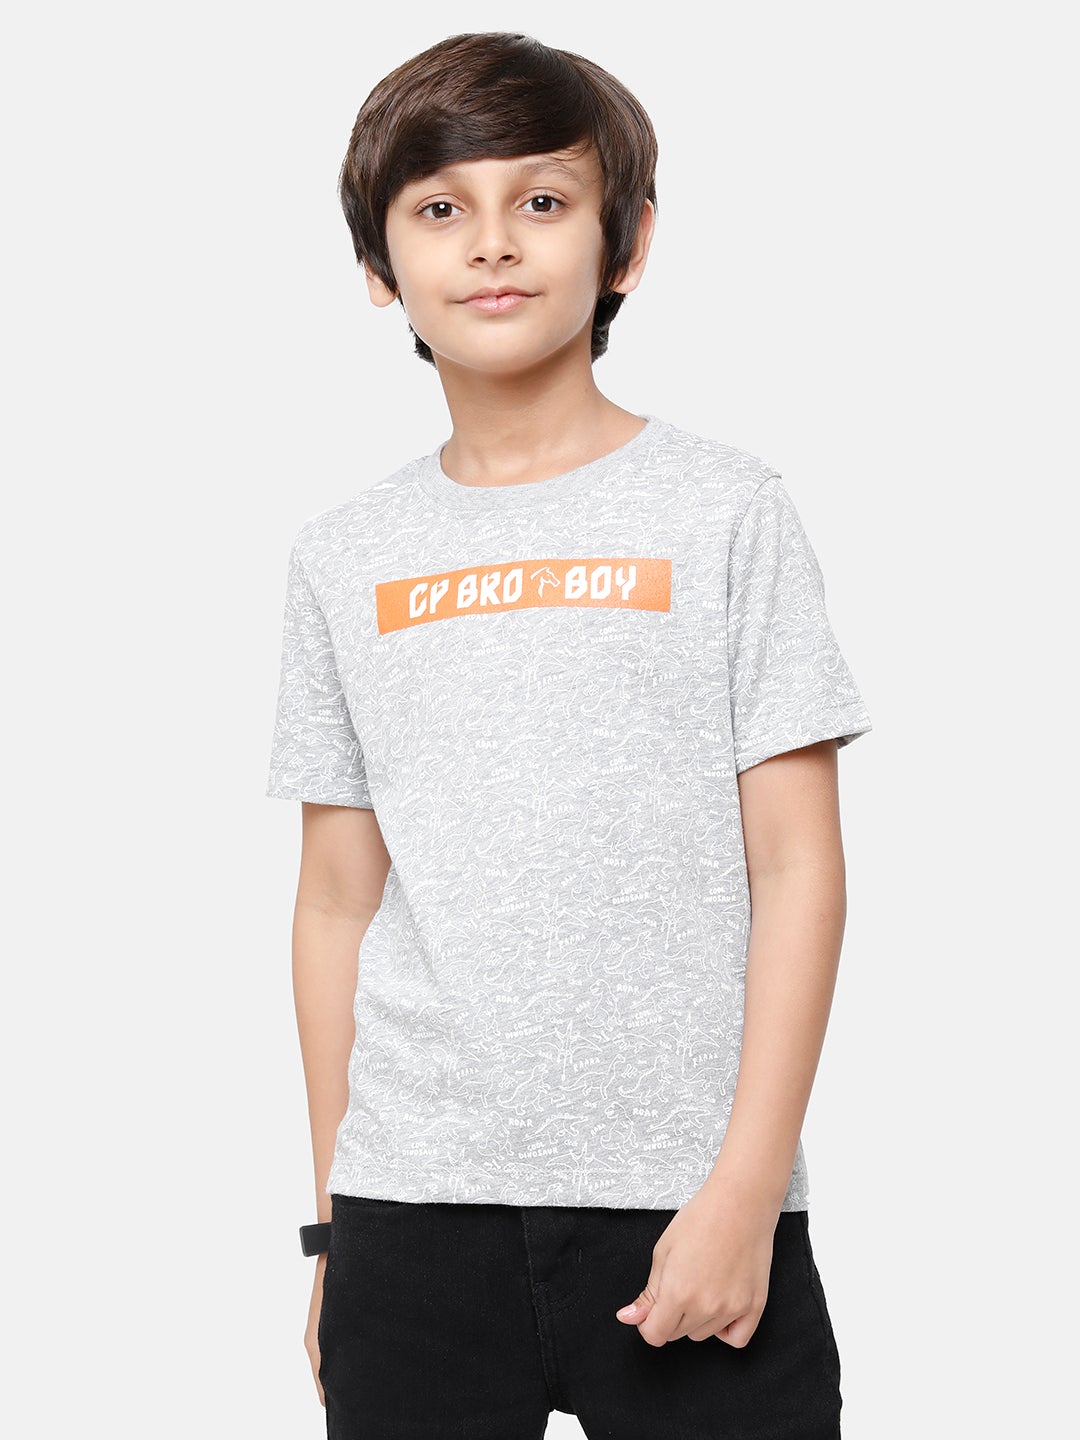 CP Boys Grey Blend Printed Slim Fit Round Neck T-Shirt T-shirt Classic Polo 